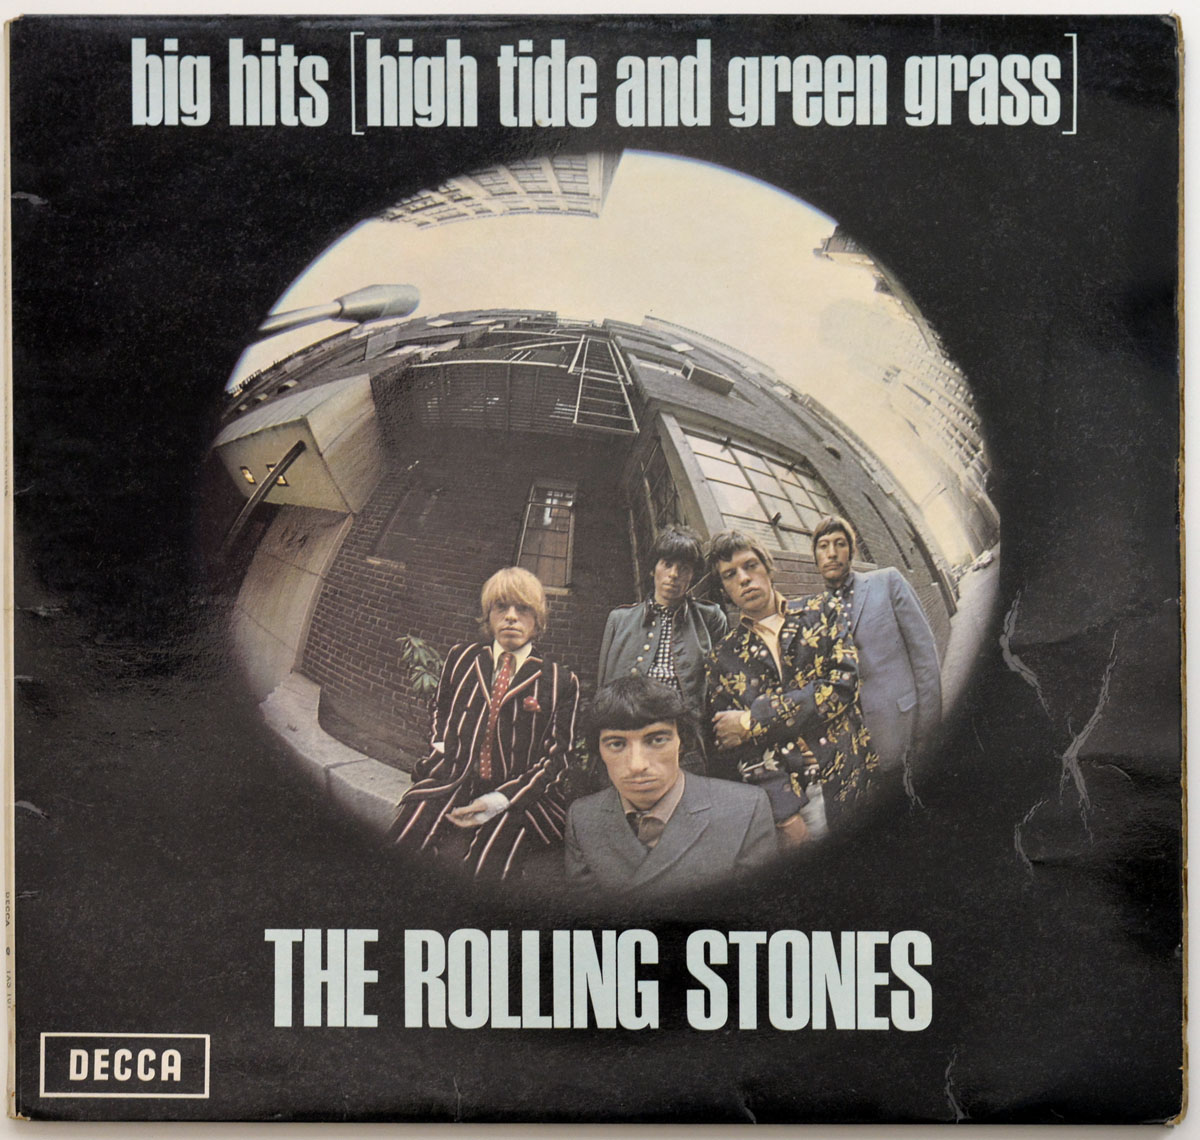 High Resolution Photo a0764 rolling stones big hits Vinyl Record